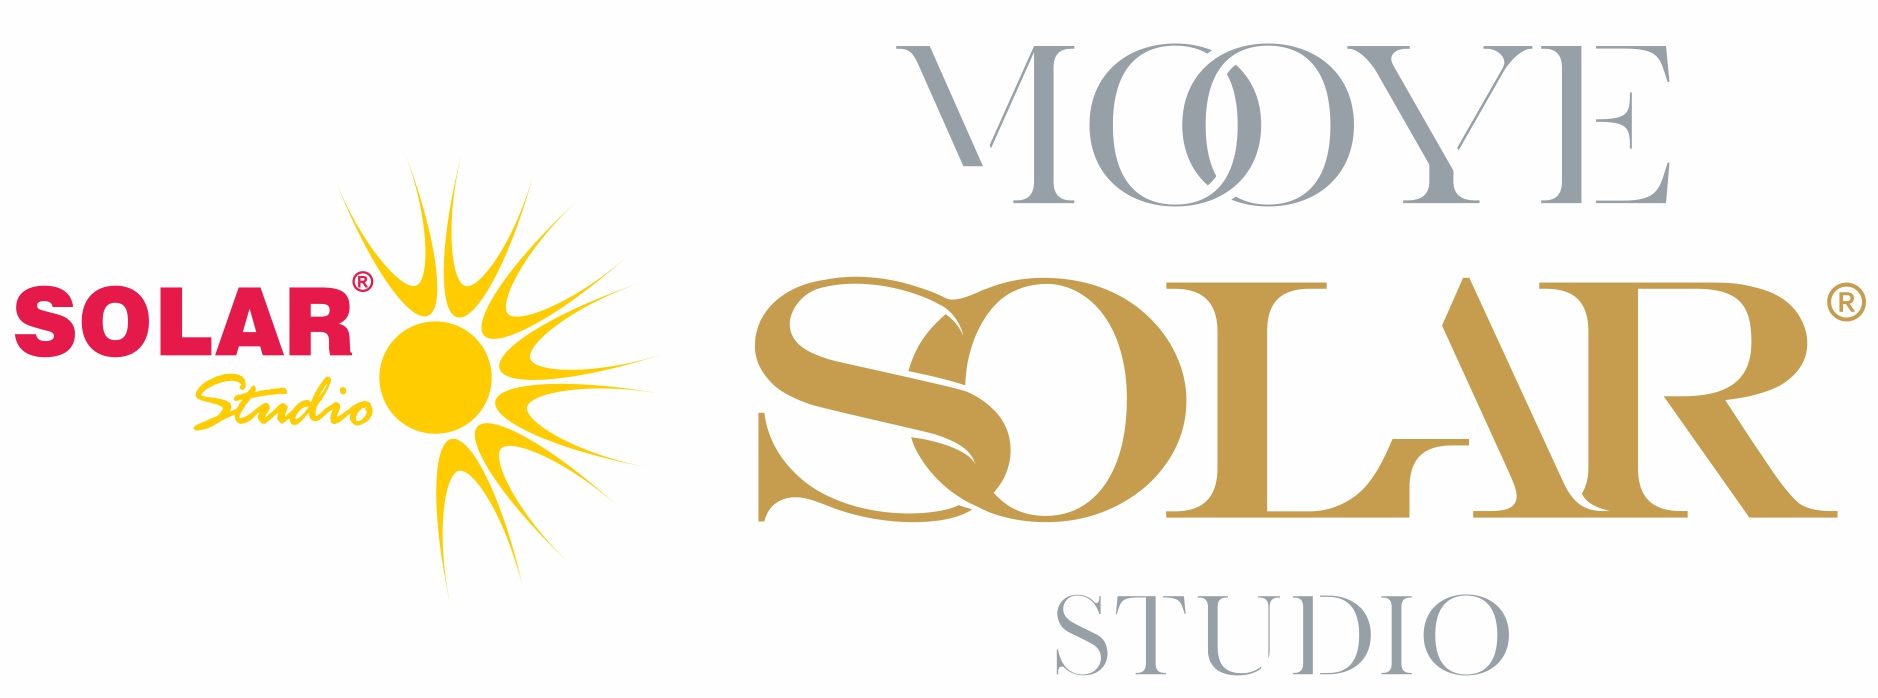 Mooye Solar Studio - Solarium, światłoterapia